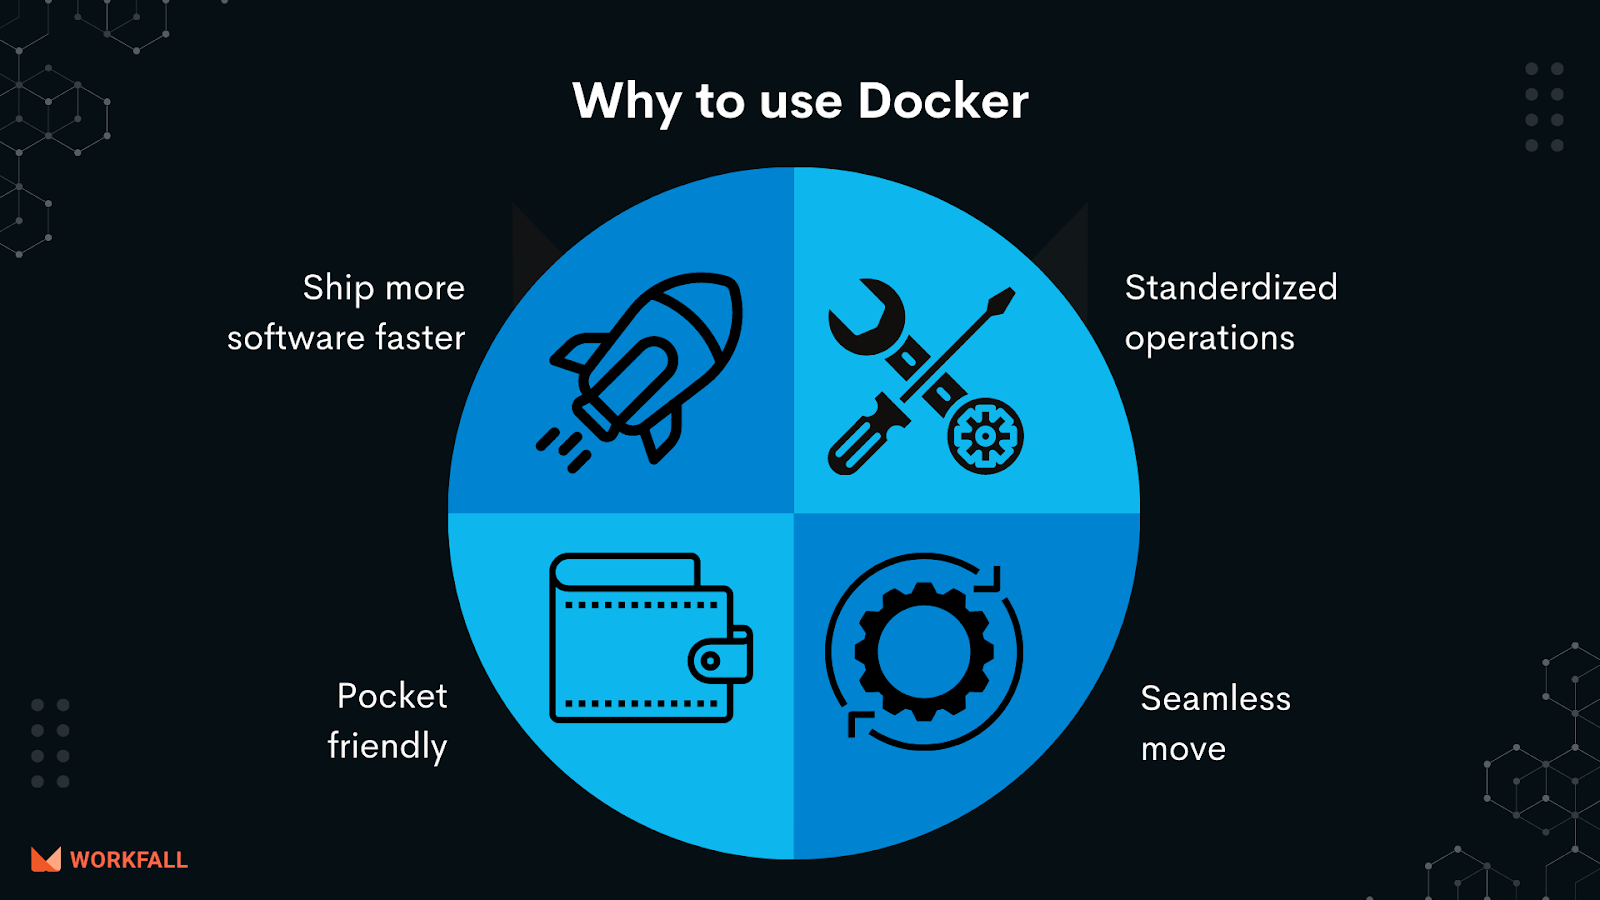 Why do we use Docker?